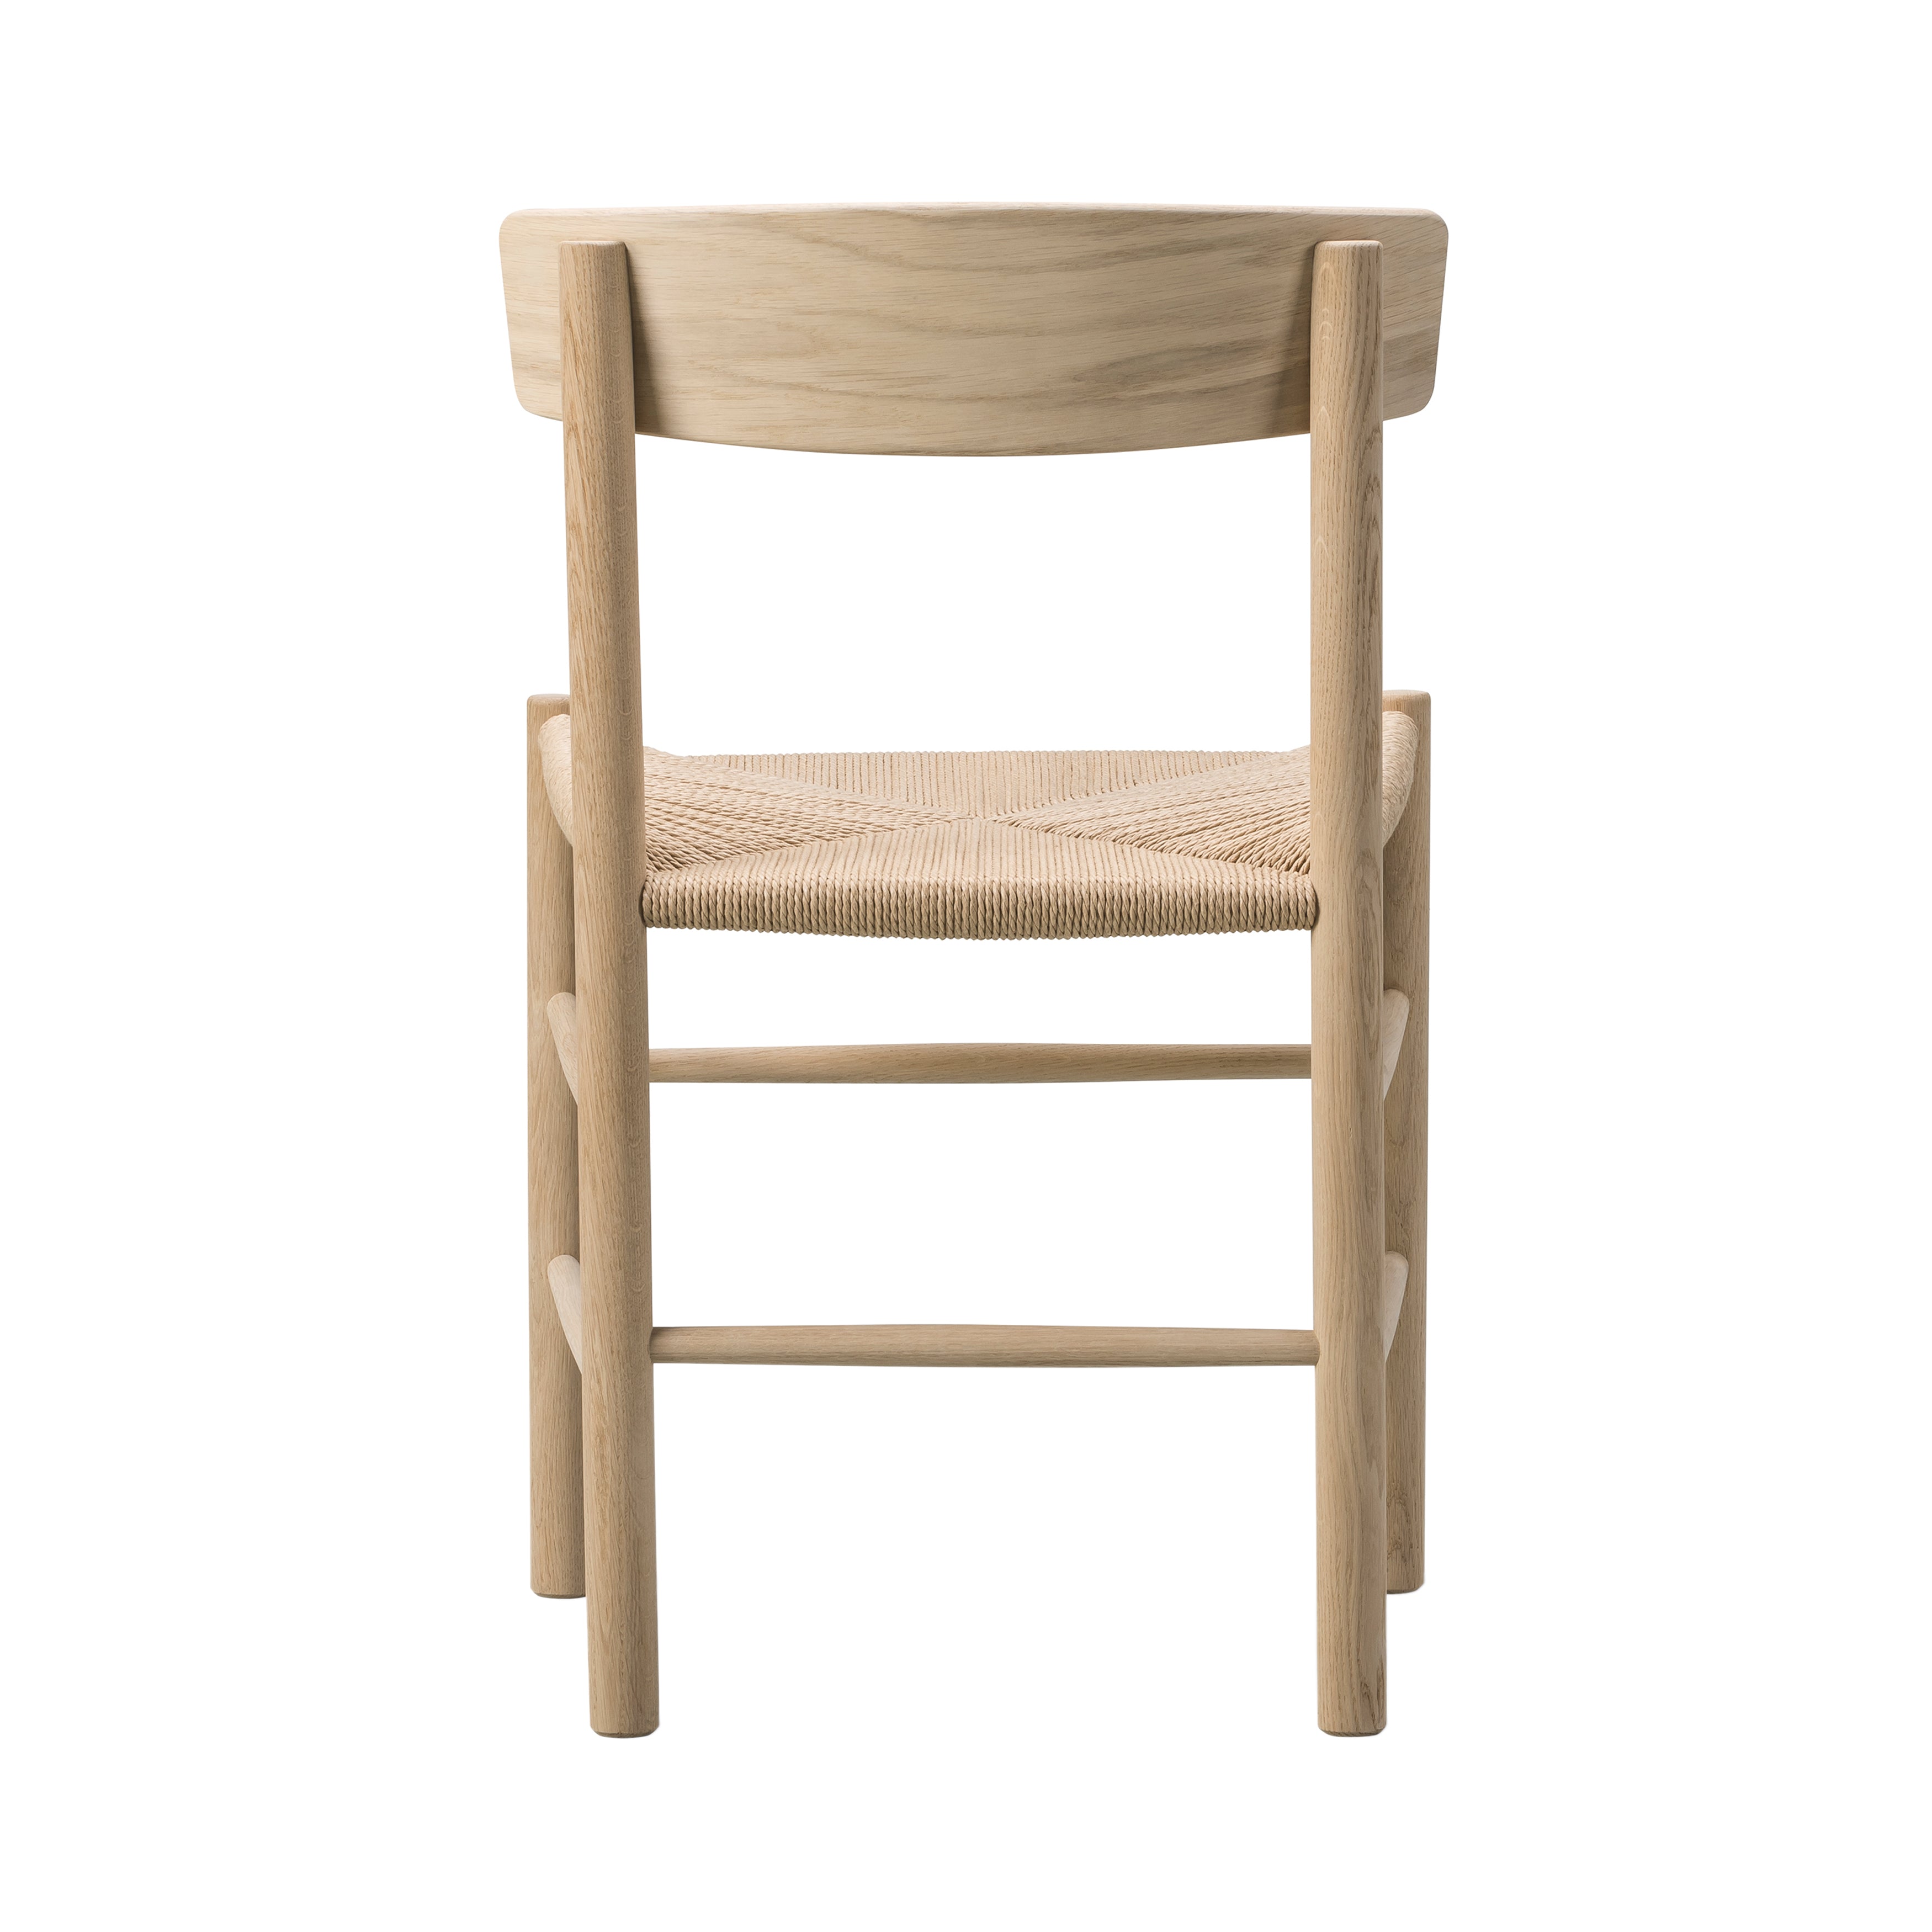 J39 Mogensen Chair: Soaped Treated Oak + Natural